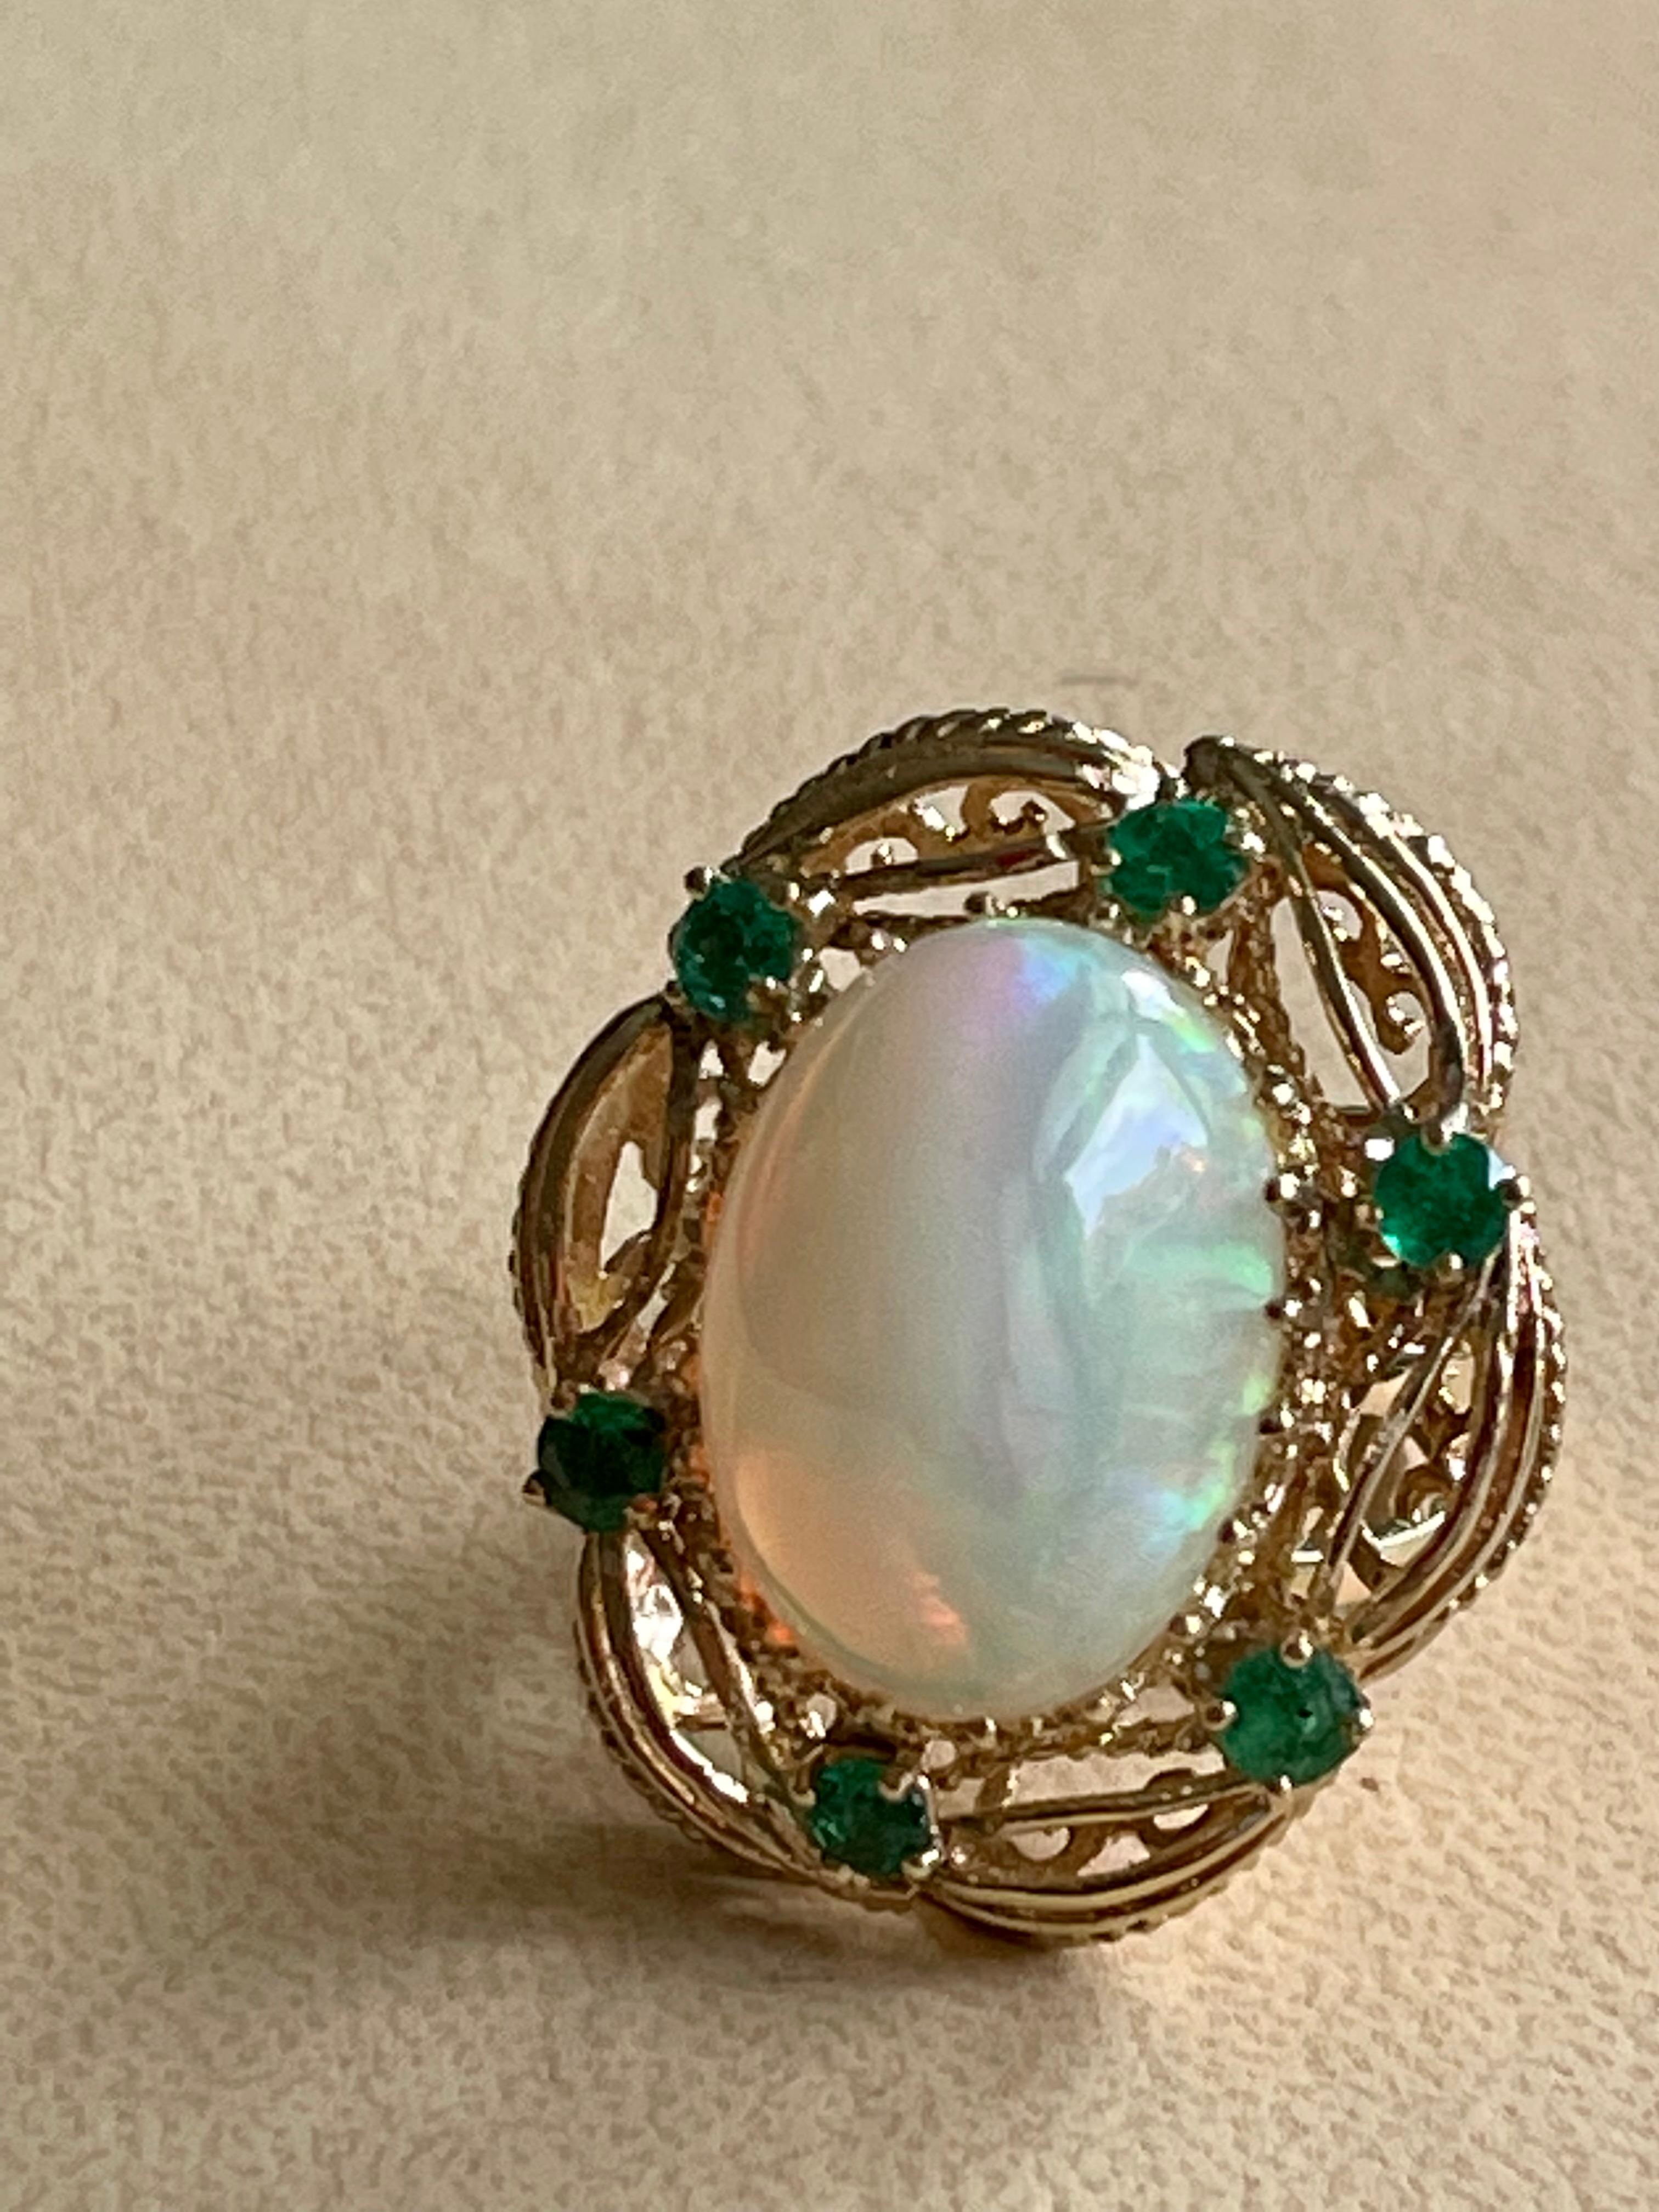 15 carat opal